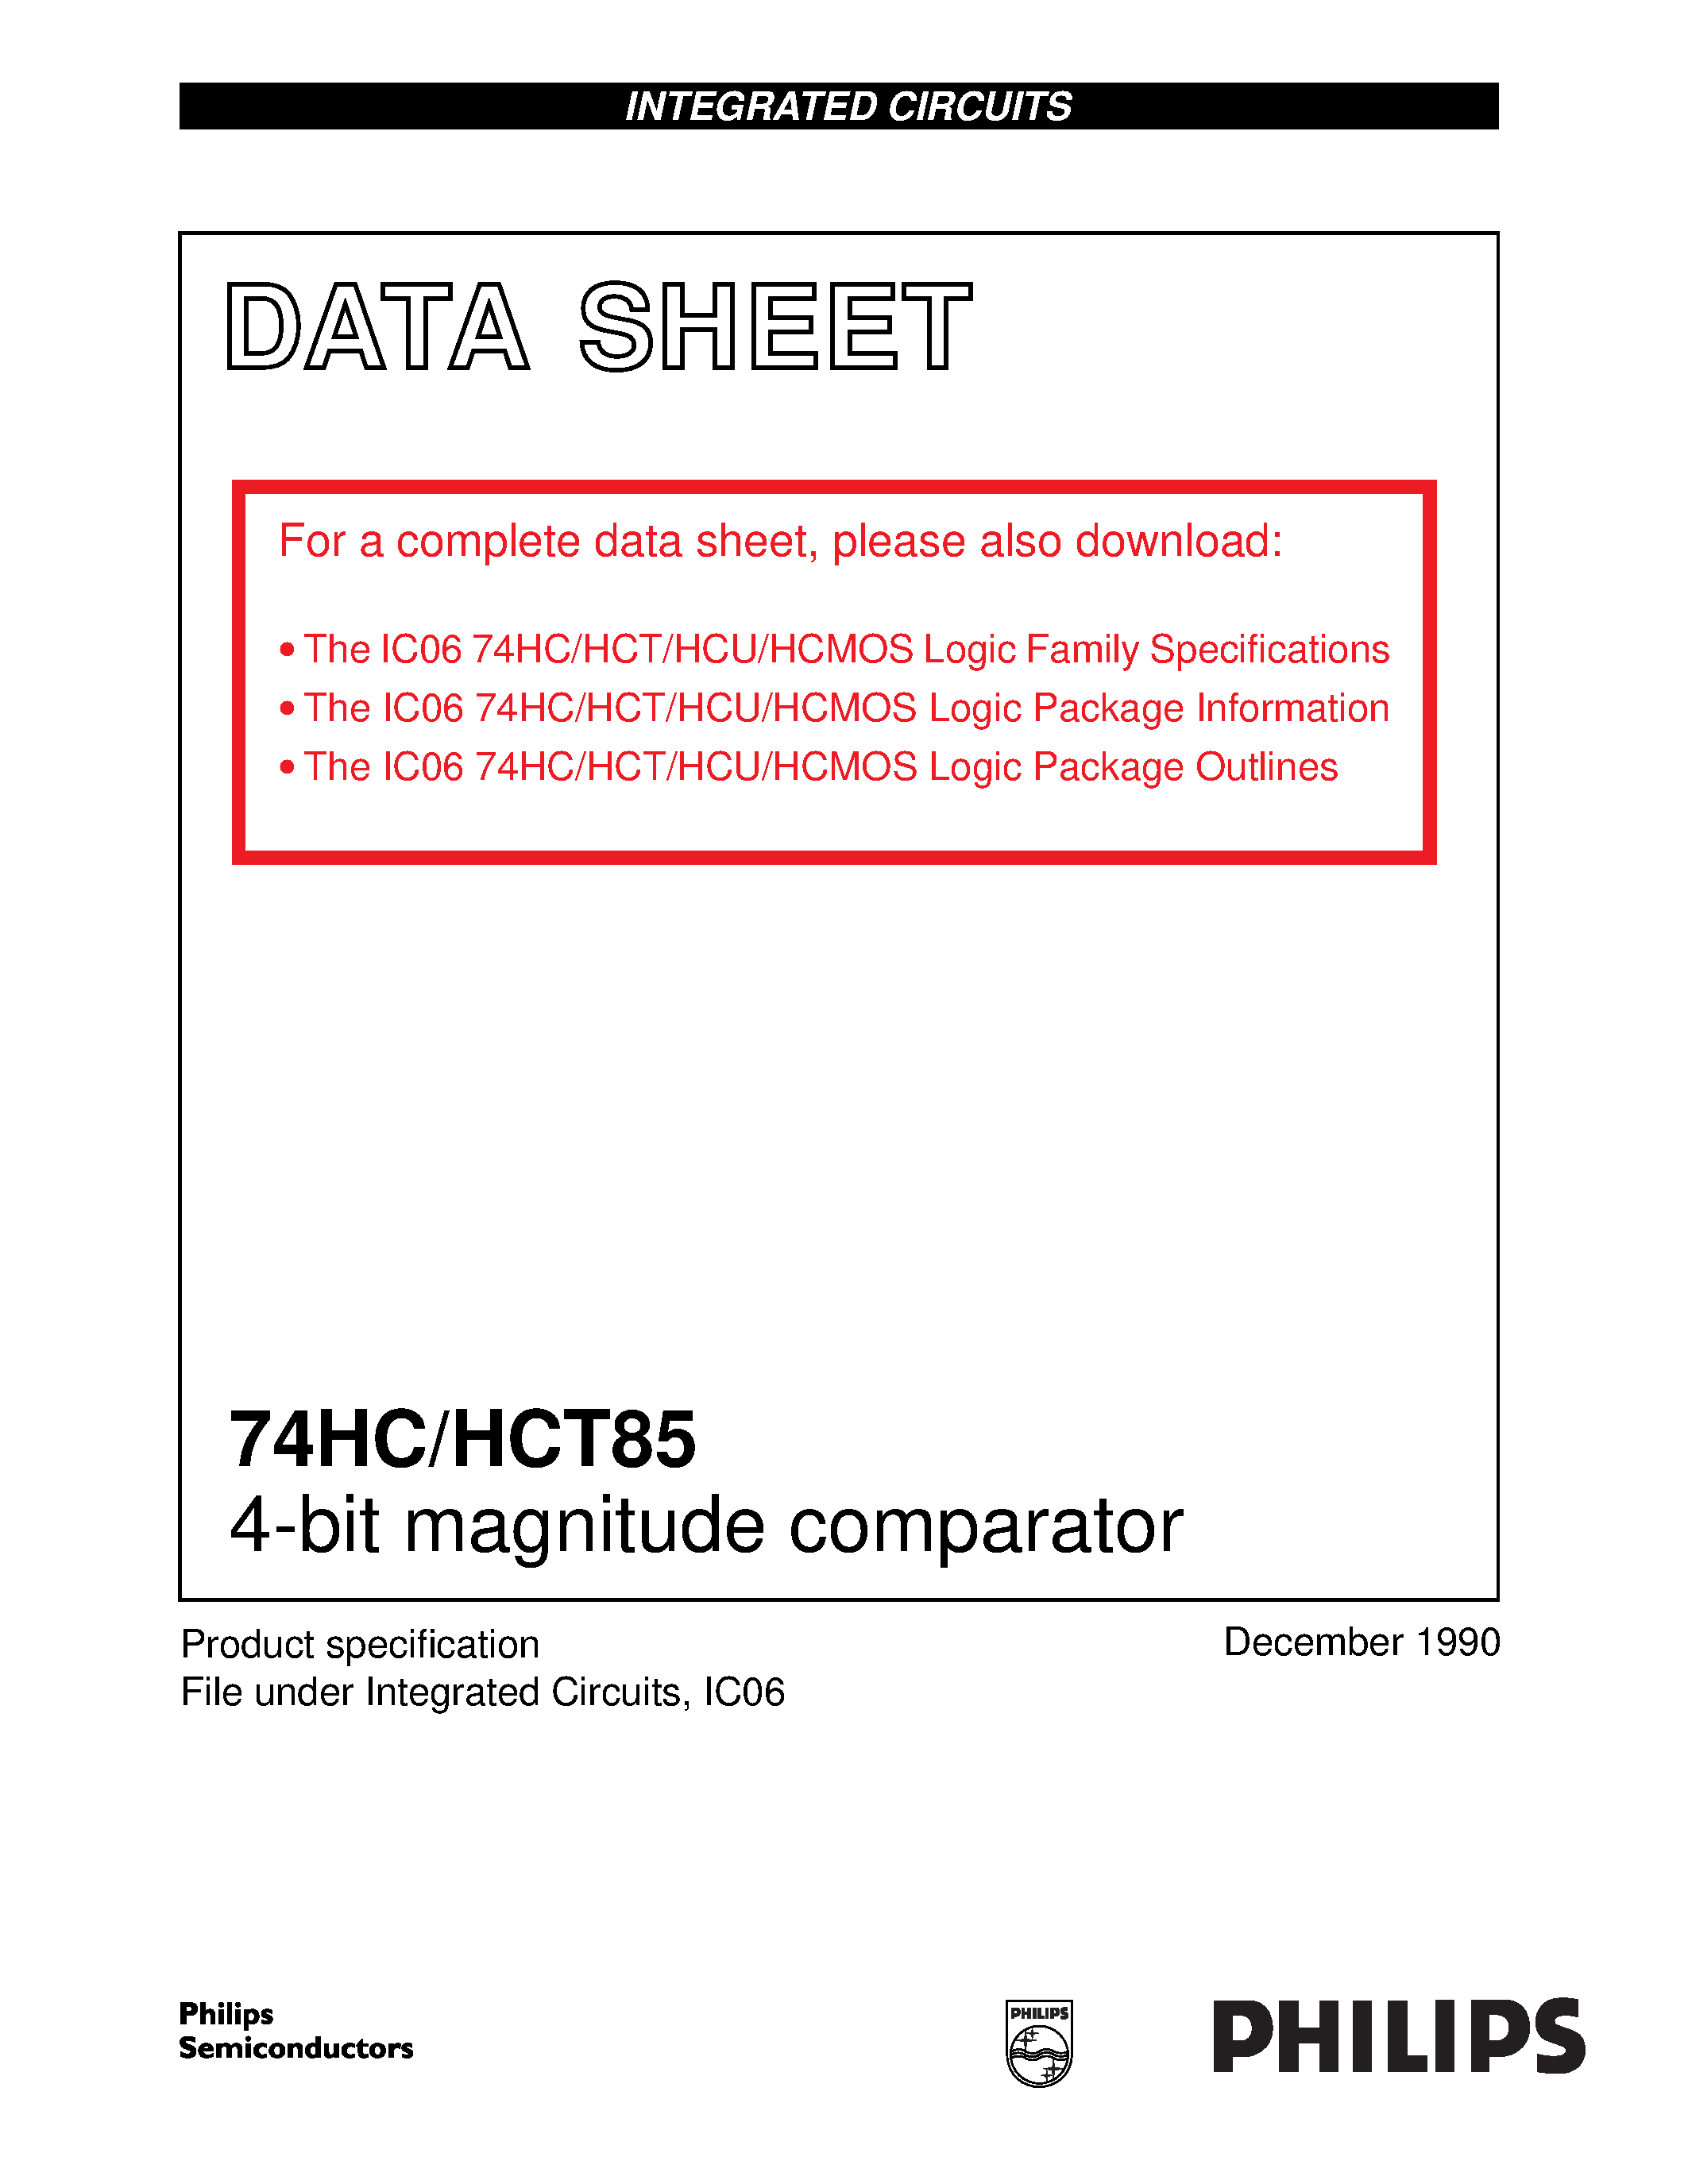 Datasheet 74HCT85 - 4-bit magnitude comparator page 1